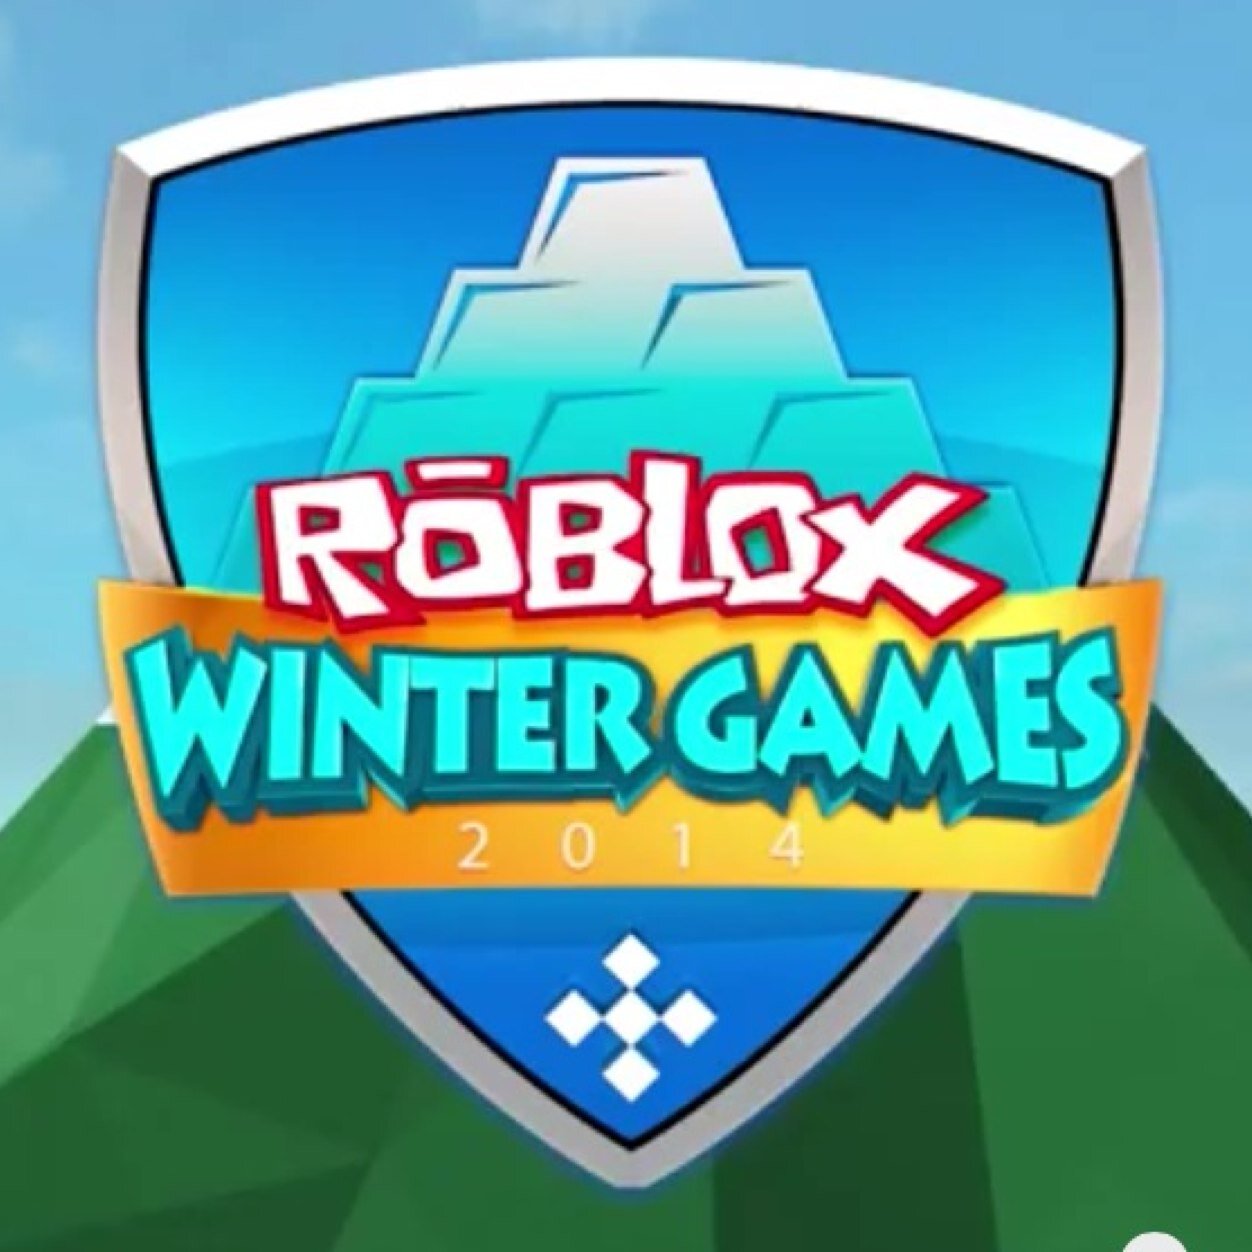 Roblox Winter Games Gamesrblx Twitter - winter games 2014 roblox